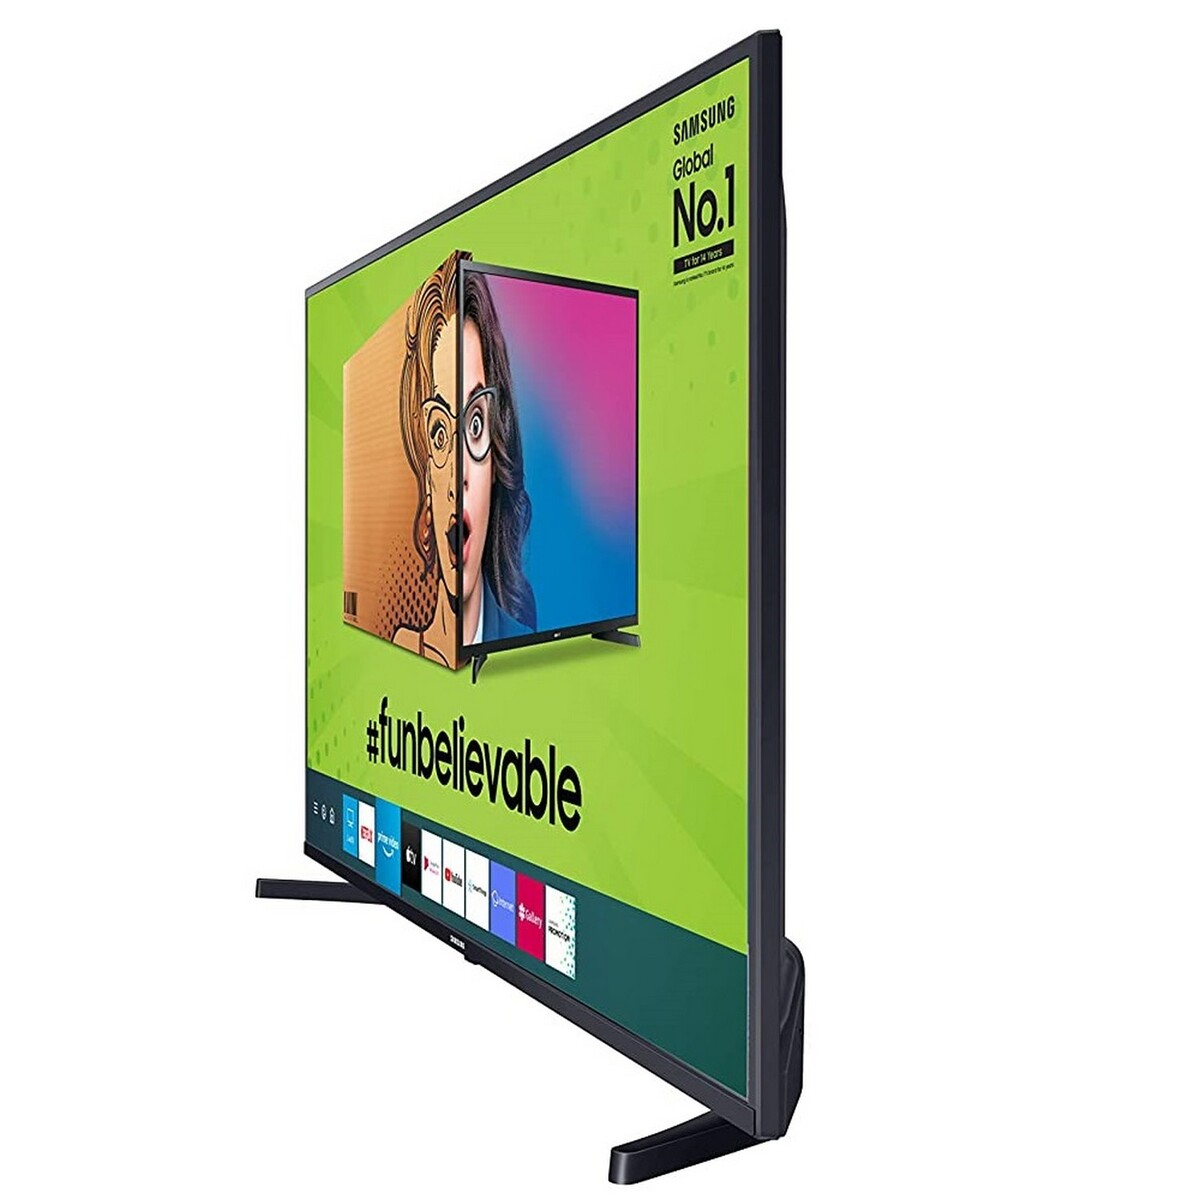 Samsung Full HD LED Smart TV UA43T5350AKXXL 43"